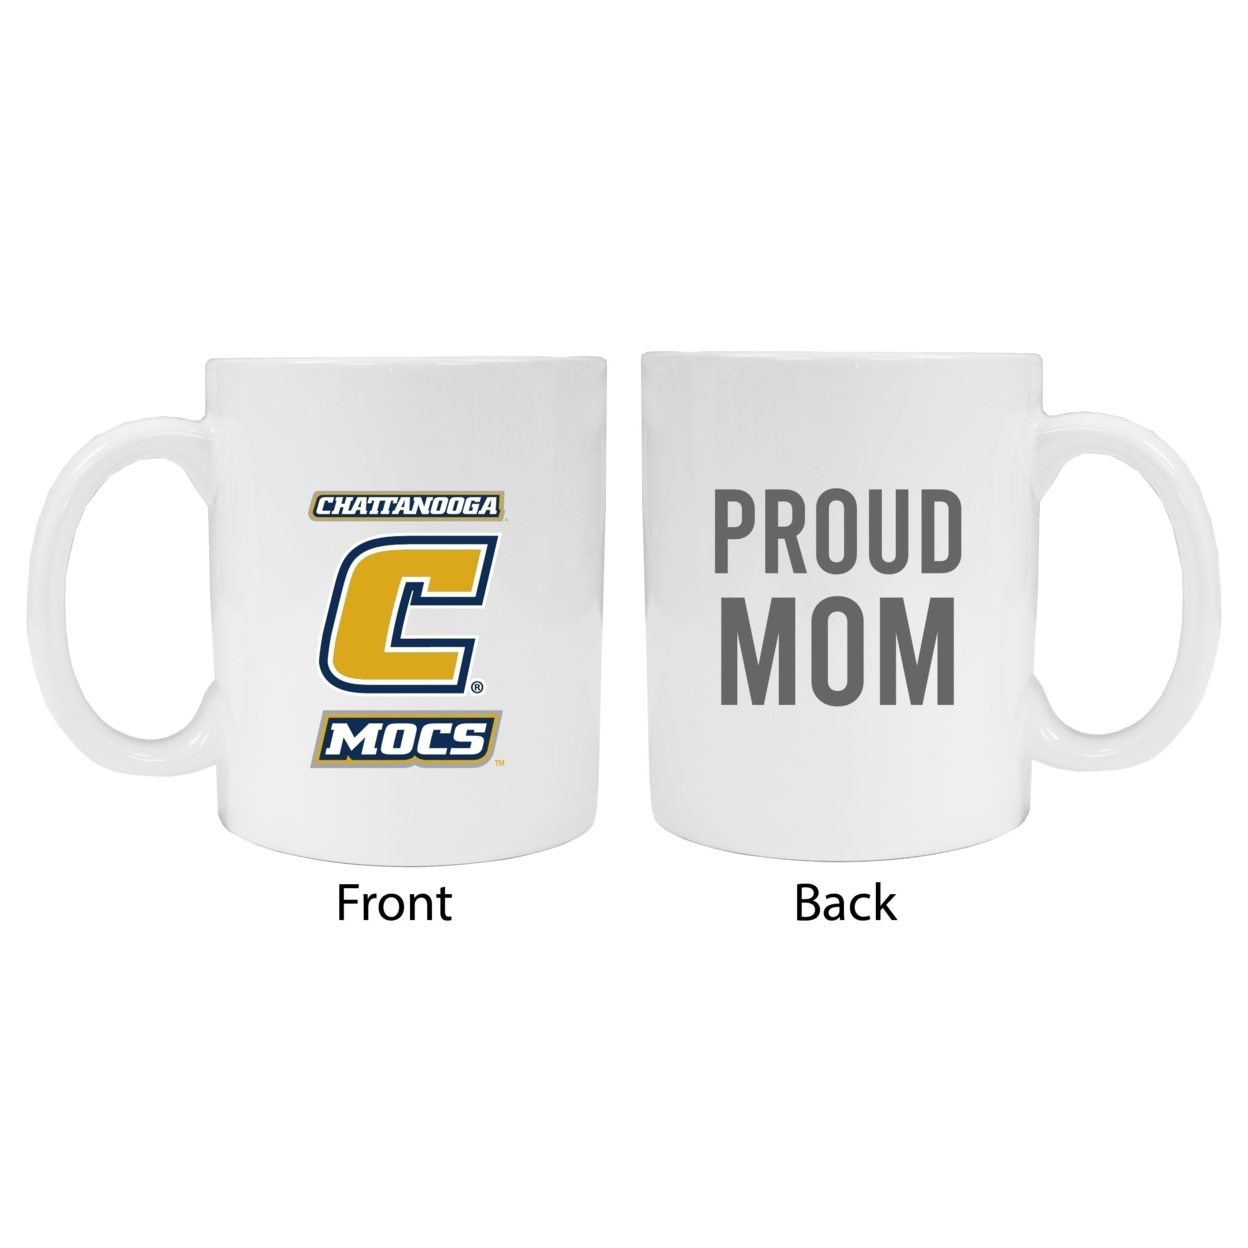 University Of Tennessee At Chattanooga Proud Mom Ceramic Coffee Mug - White